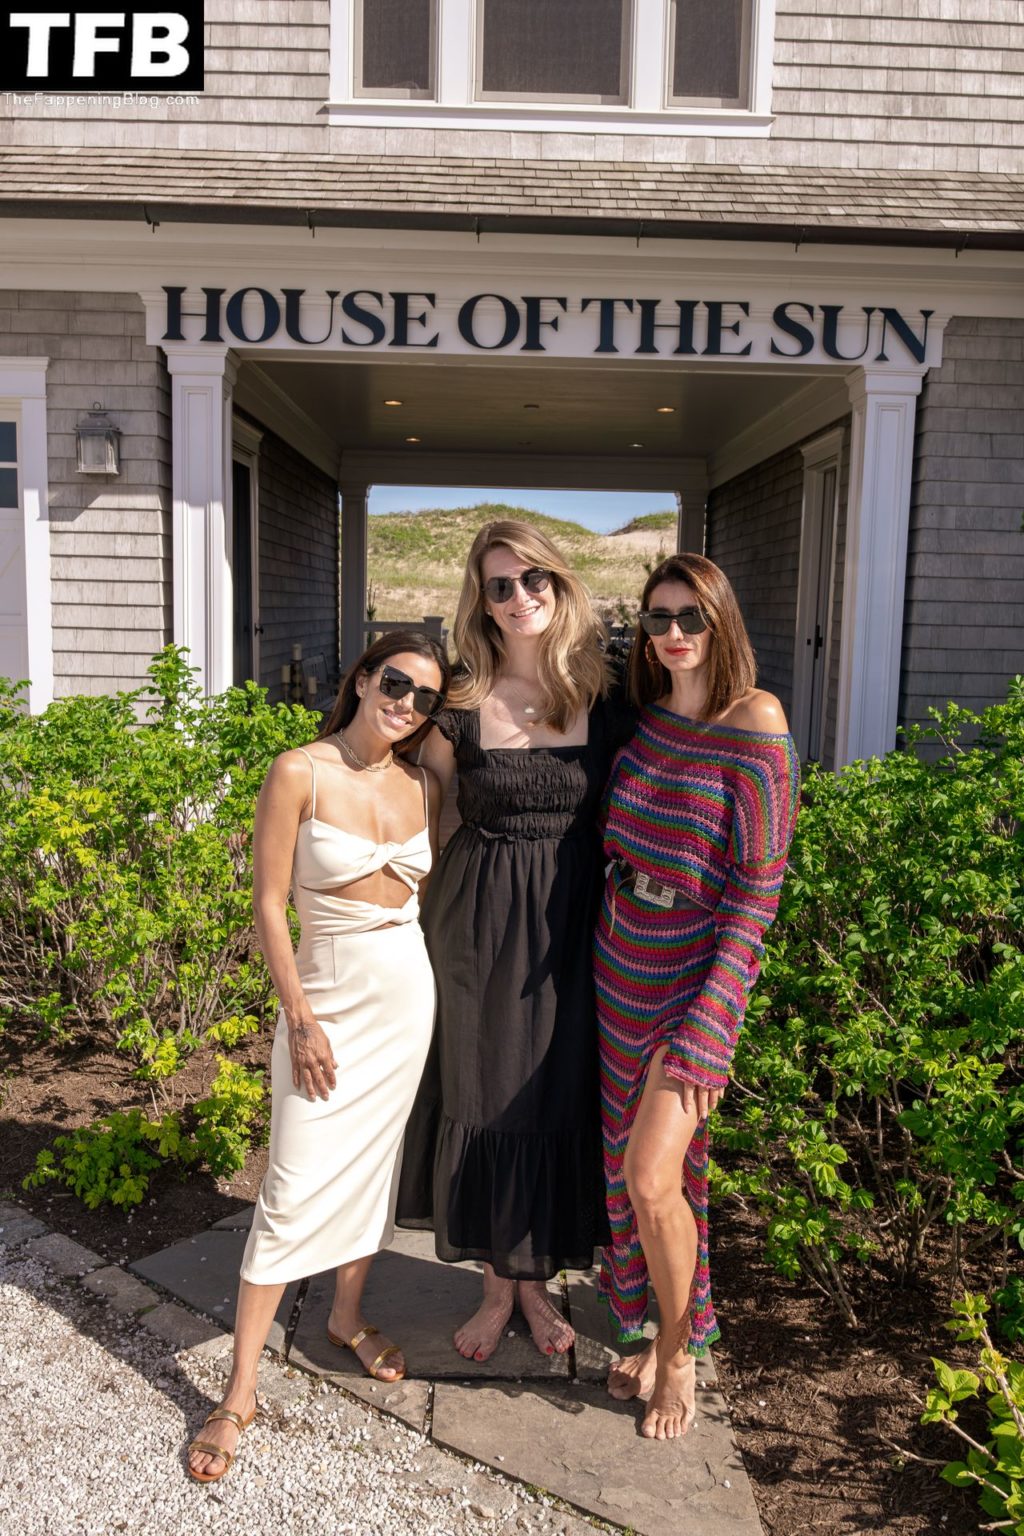 Eva Longoria Sexy The Fappening Blog 6 1024x1536 - Eva Longoria Looks Hot as She Attends Casa Del Sol’s “House of the Sun” Beach Party in Montauk (35 Photos)